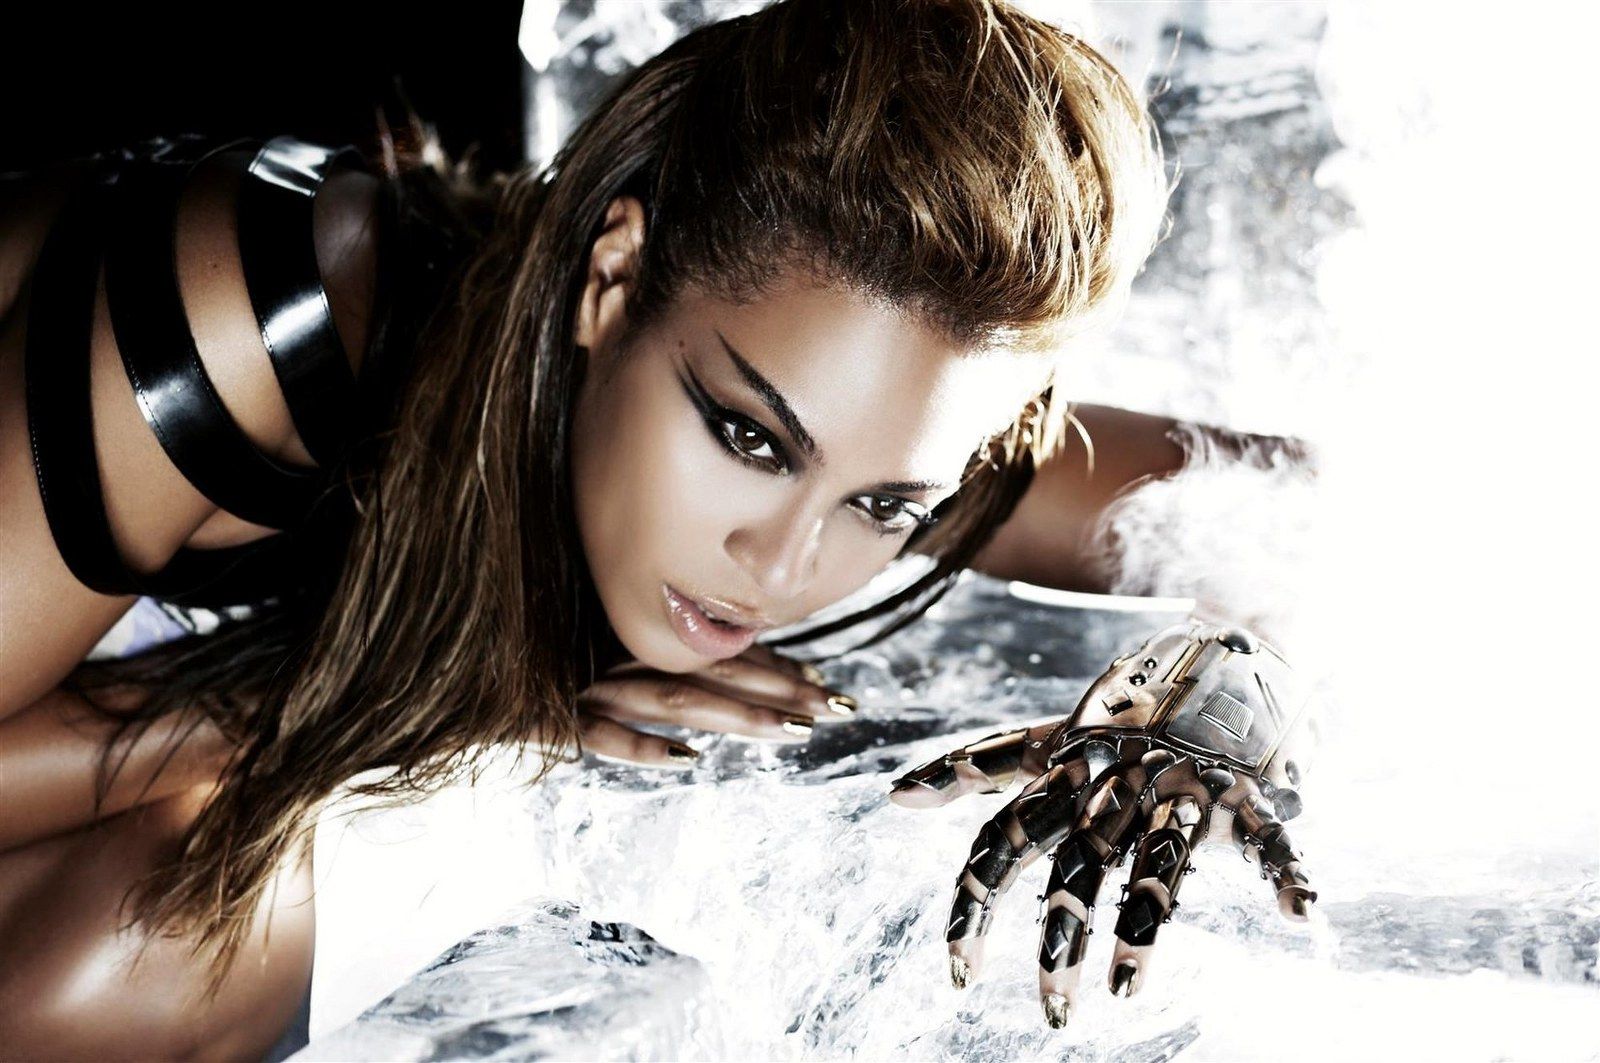 Beyonce Singer Wallpaper 16001063 wallpapers55.com - Best